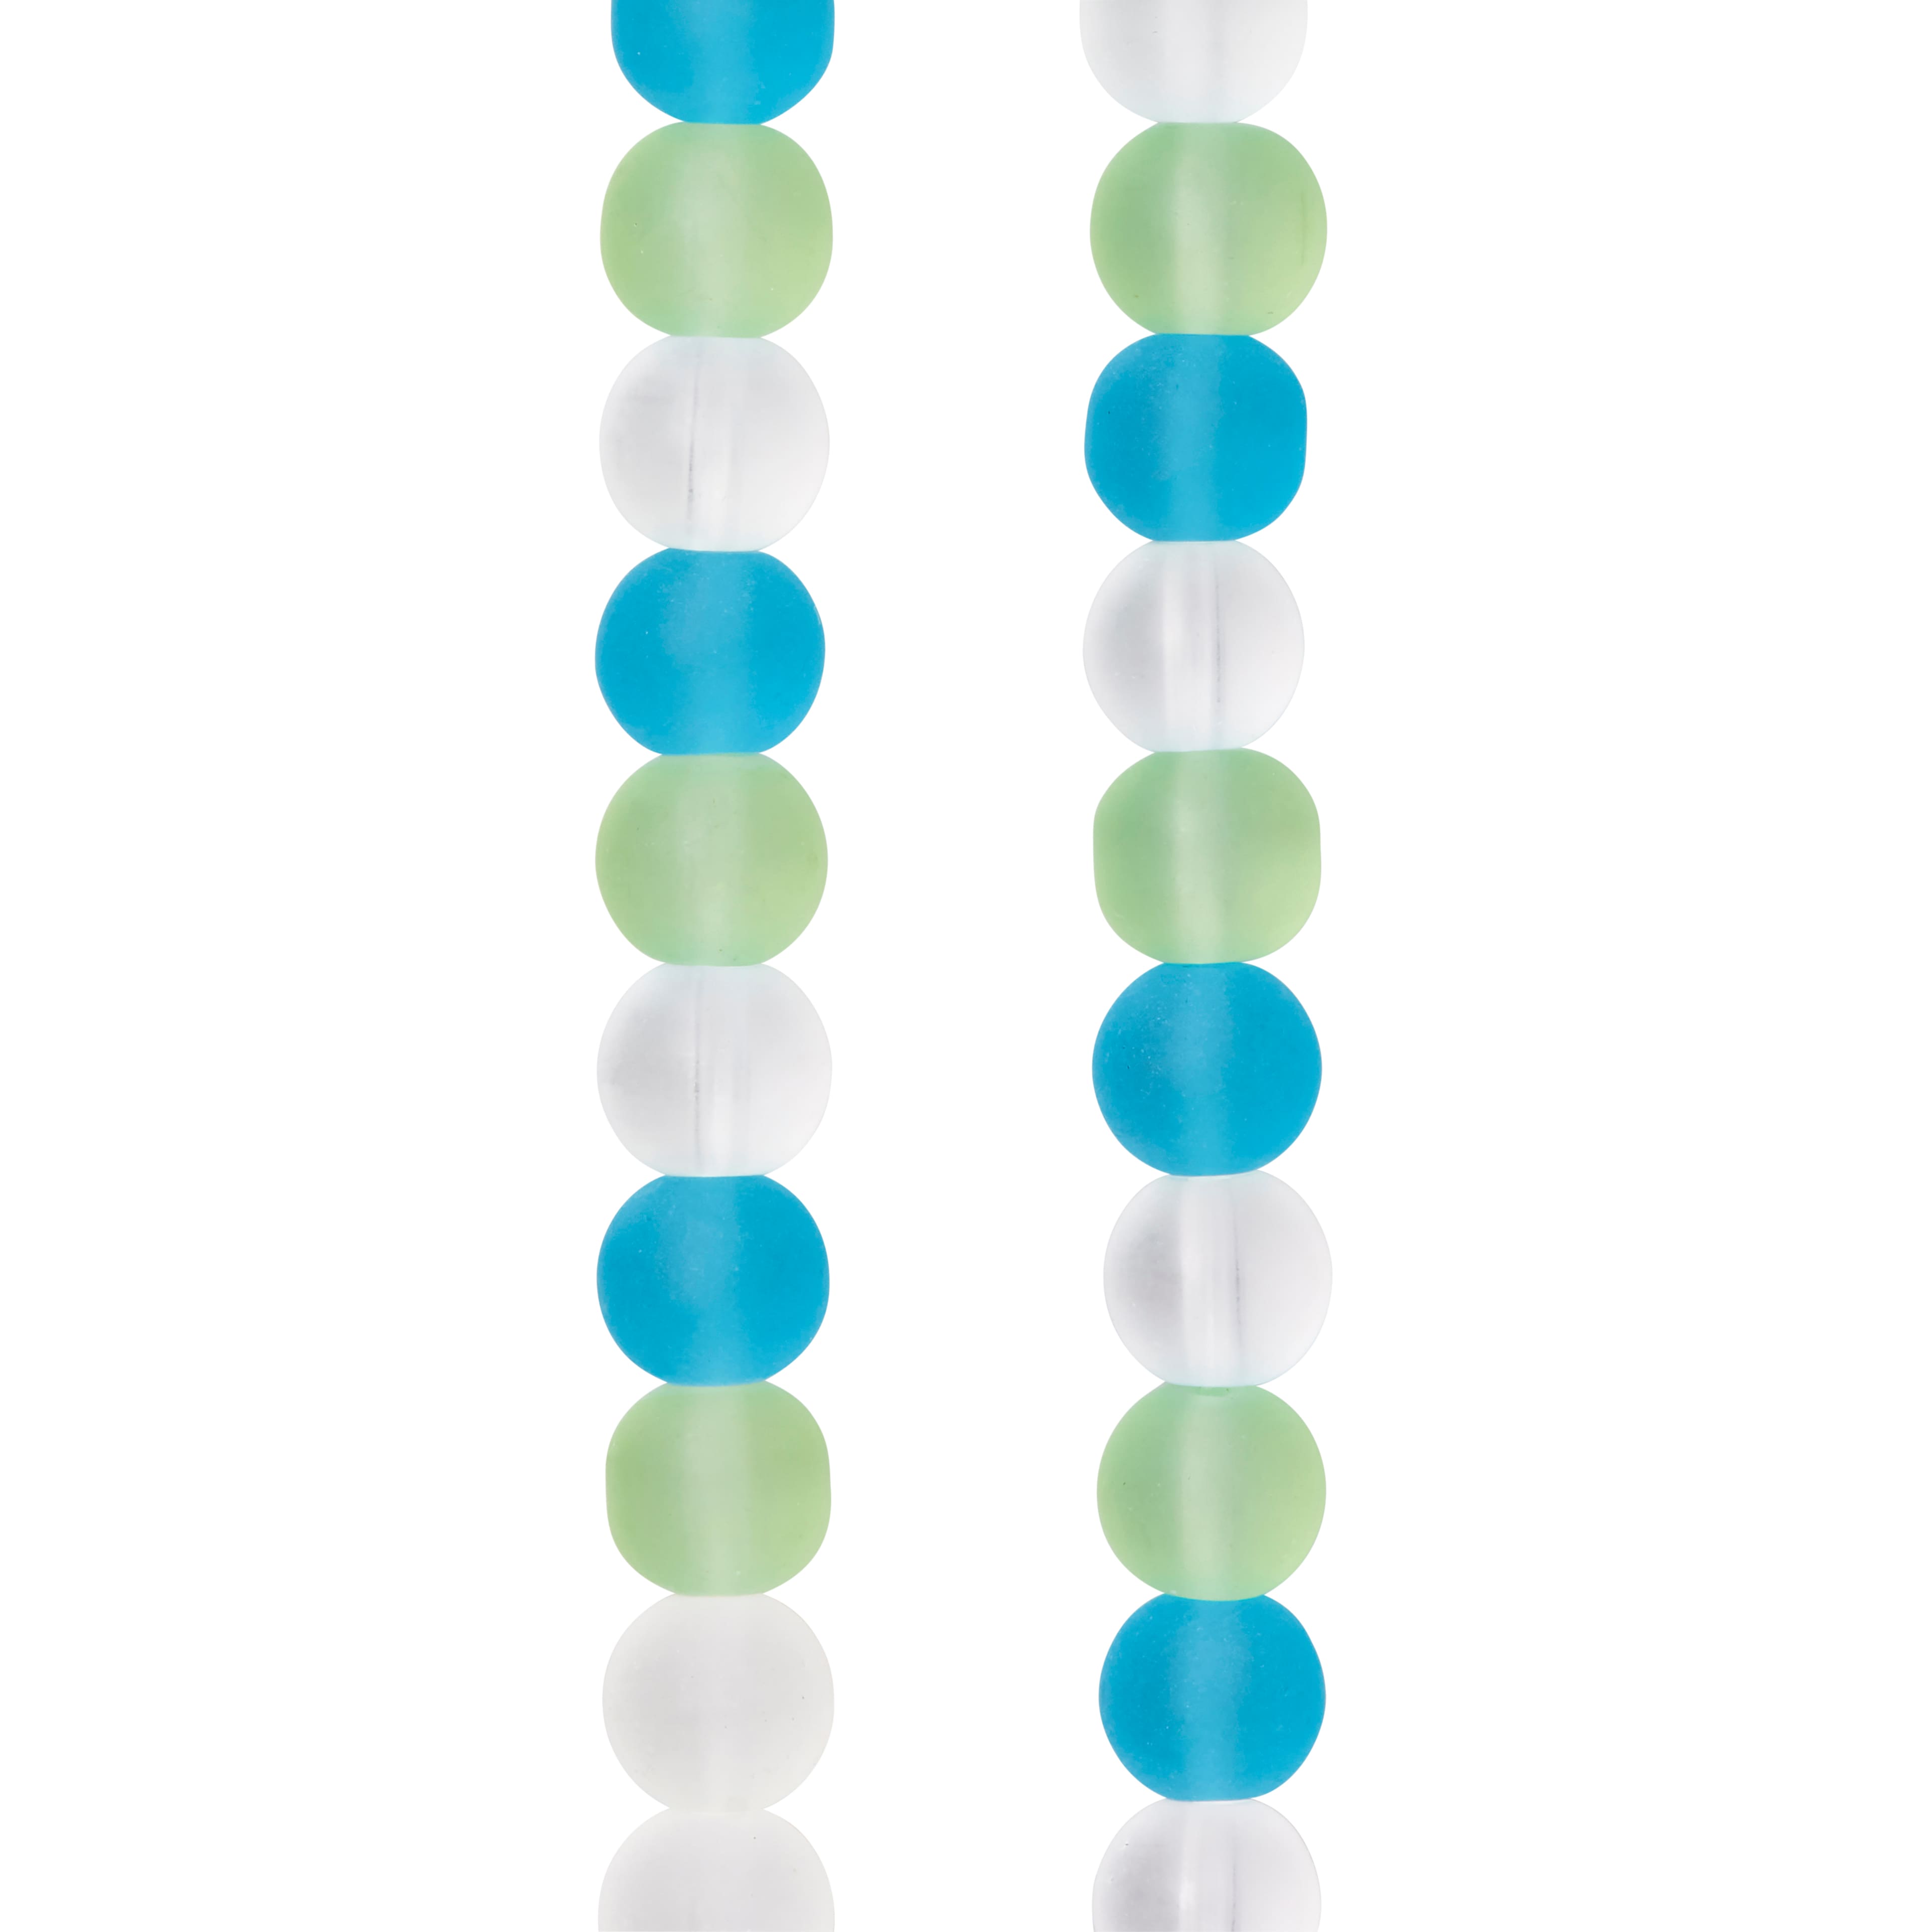 Glow-in-the-Dark Glass Round Beads - 8mm, Blue #7, 15 inch strand